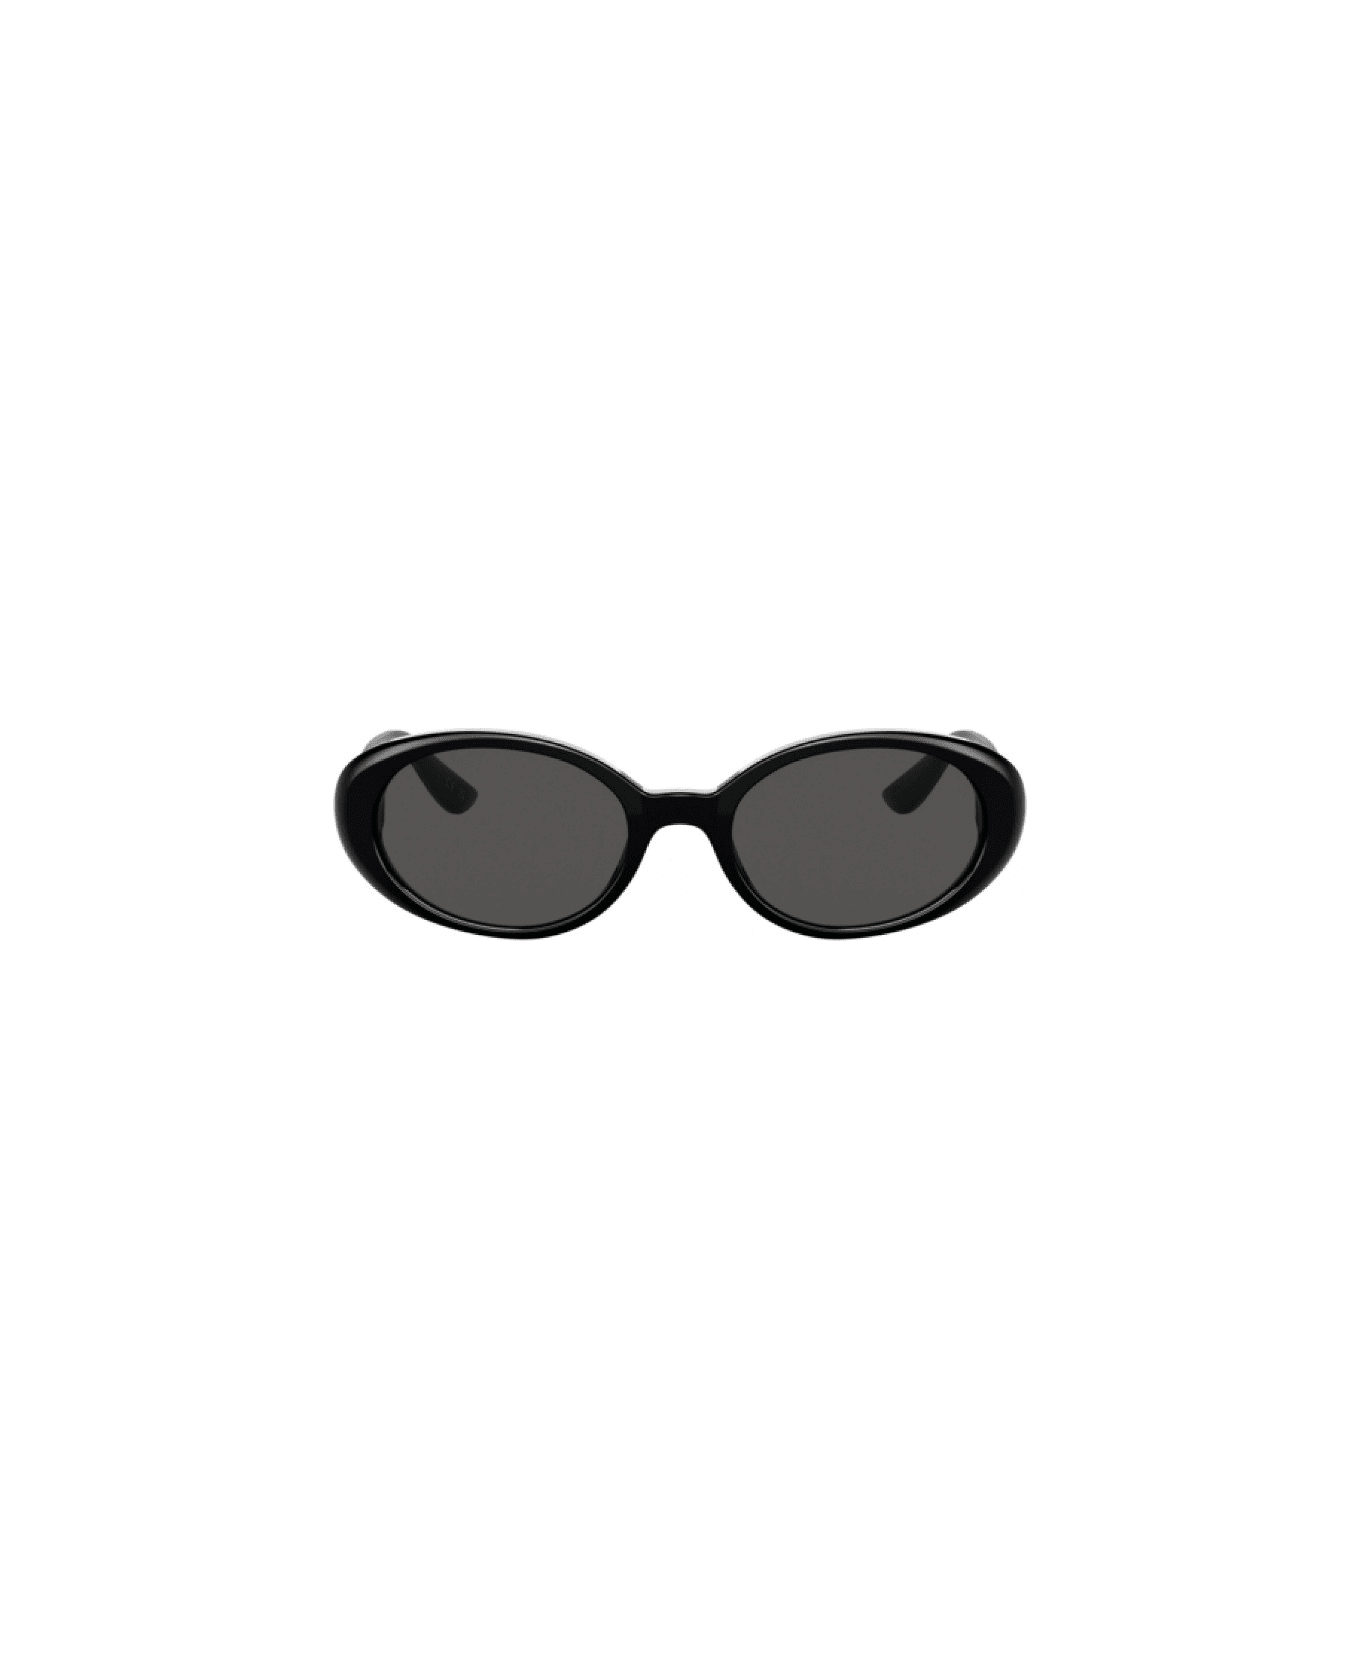 Dolce & Gabbana Eyewear DG4443S-501/87 Sunglasses - Nero